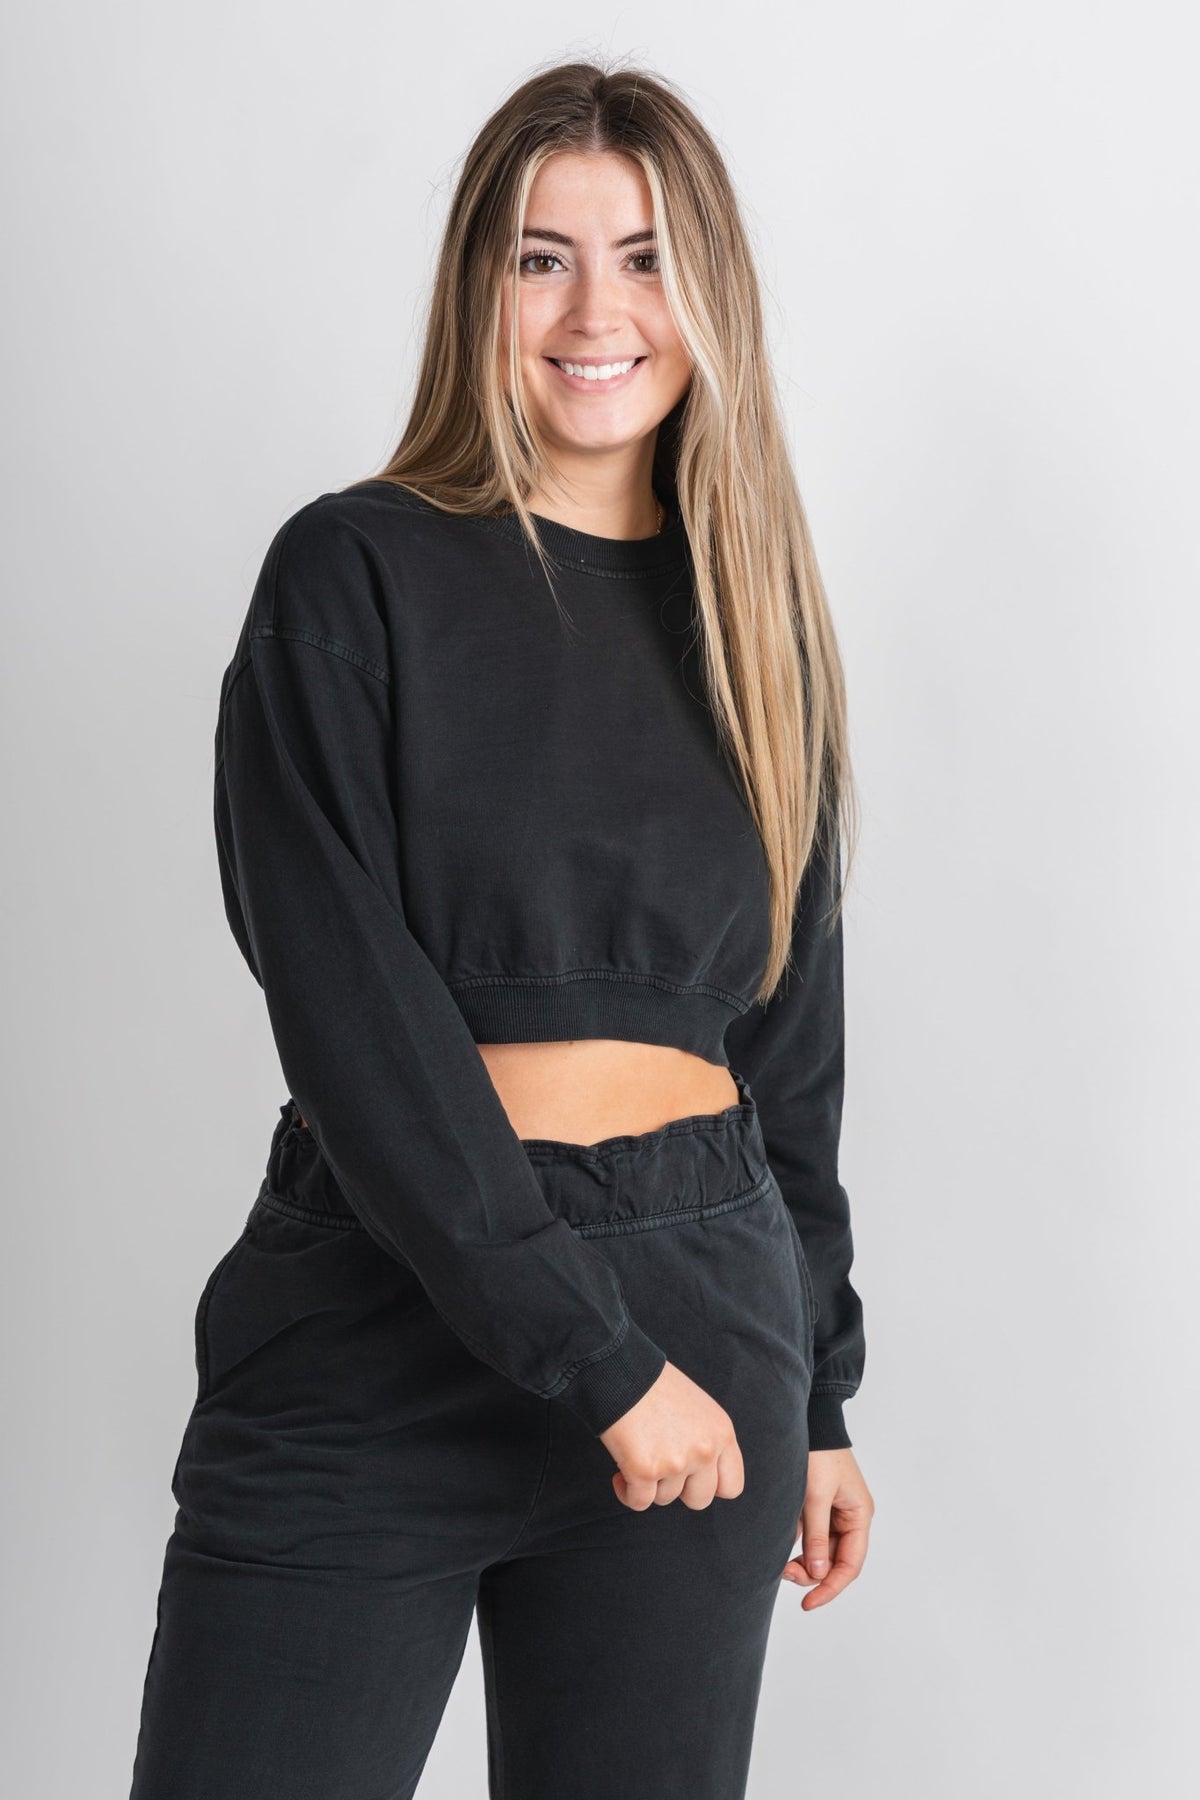 Cropped sweatshirt black - Trendy Sweatshirt - Cute Loungewear Collection at Lush Fashion Lounge Boutique in Oklahoma City